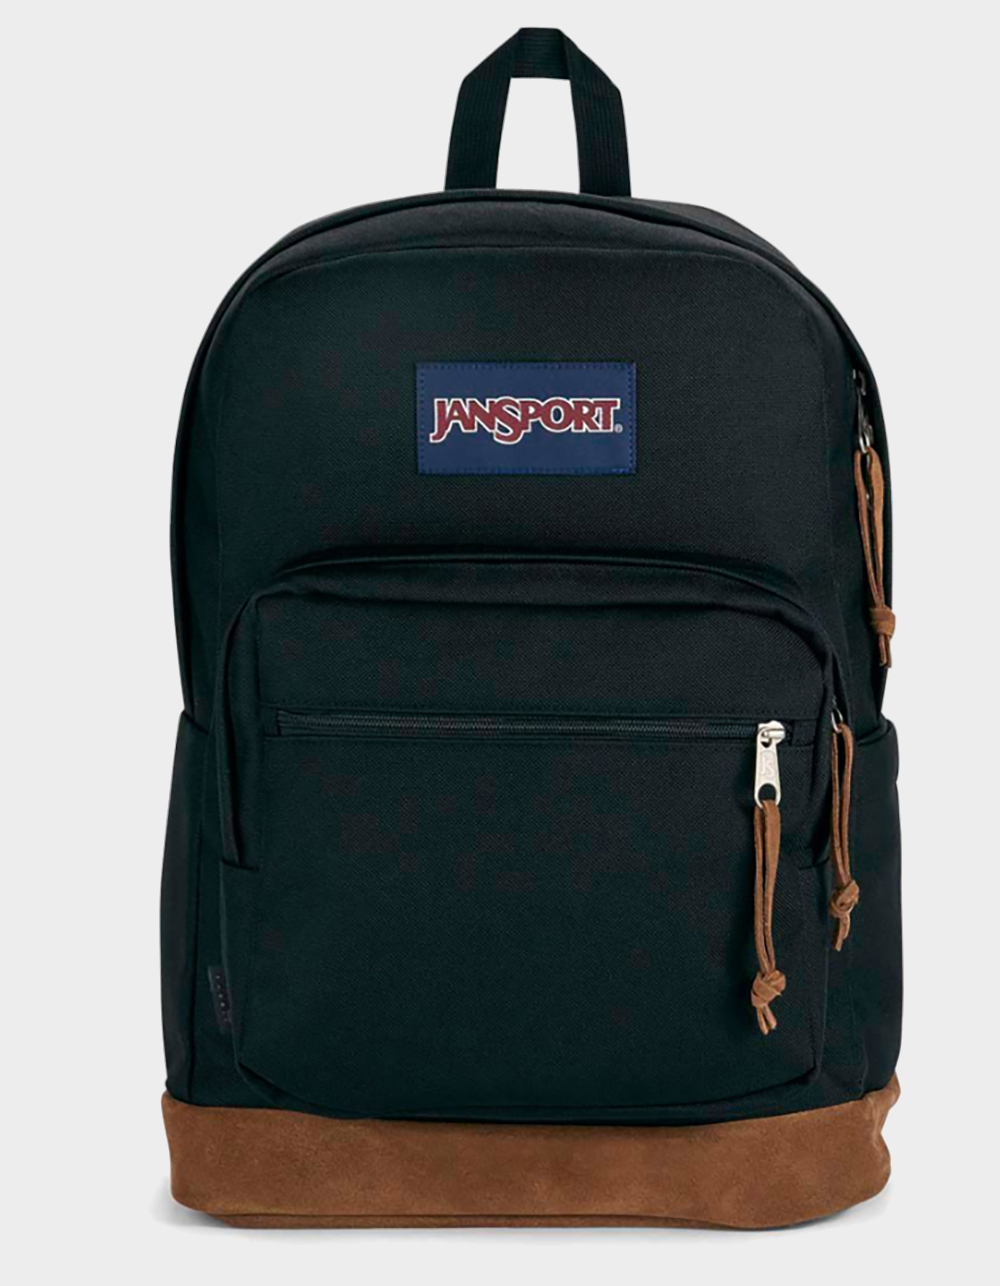 high school backpacks